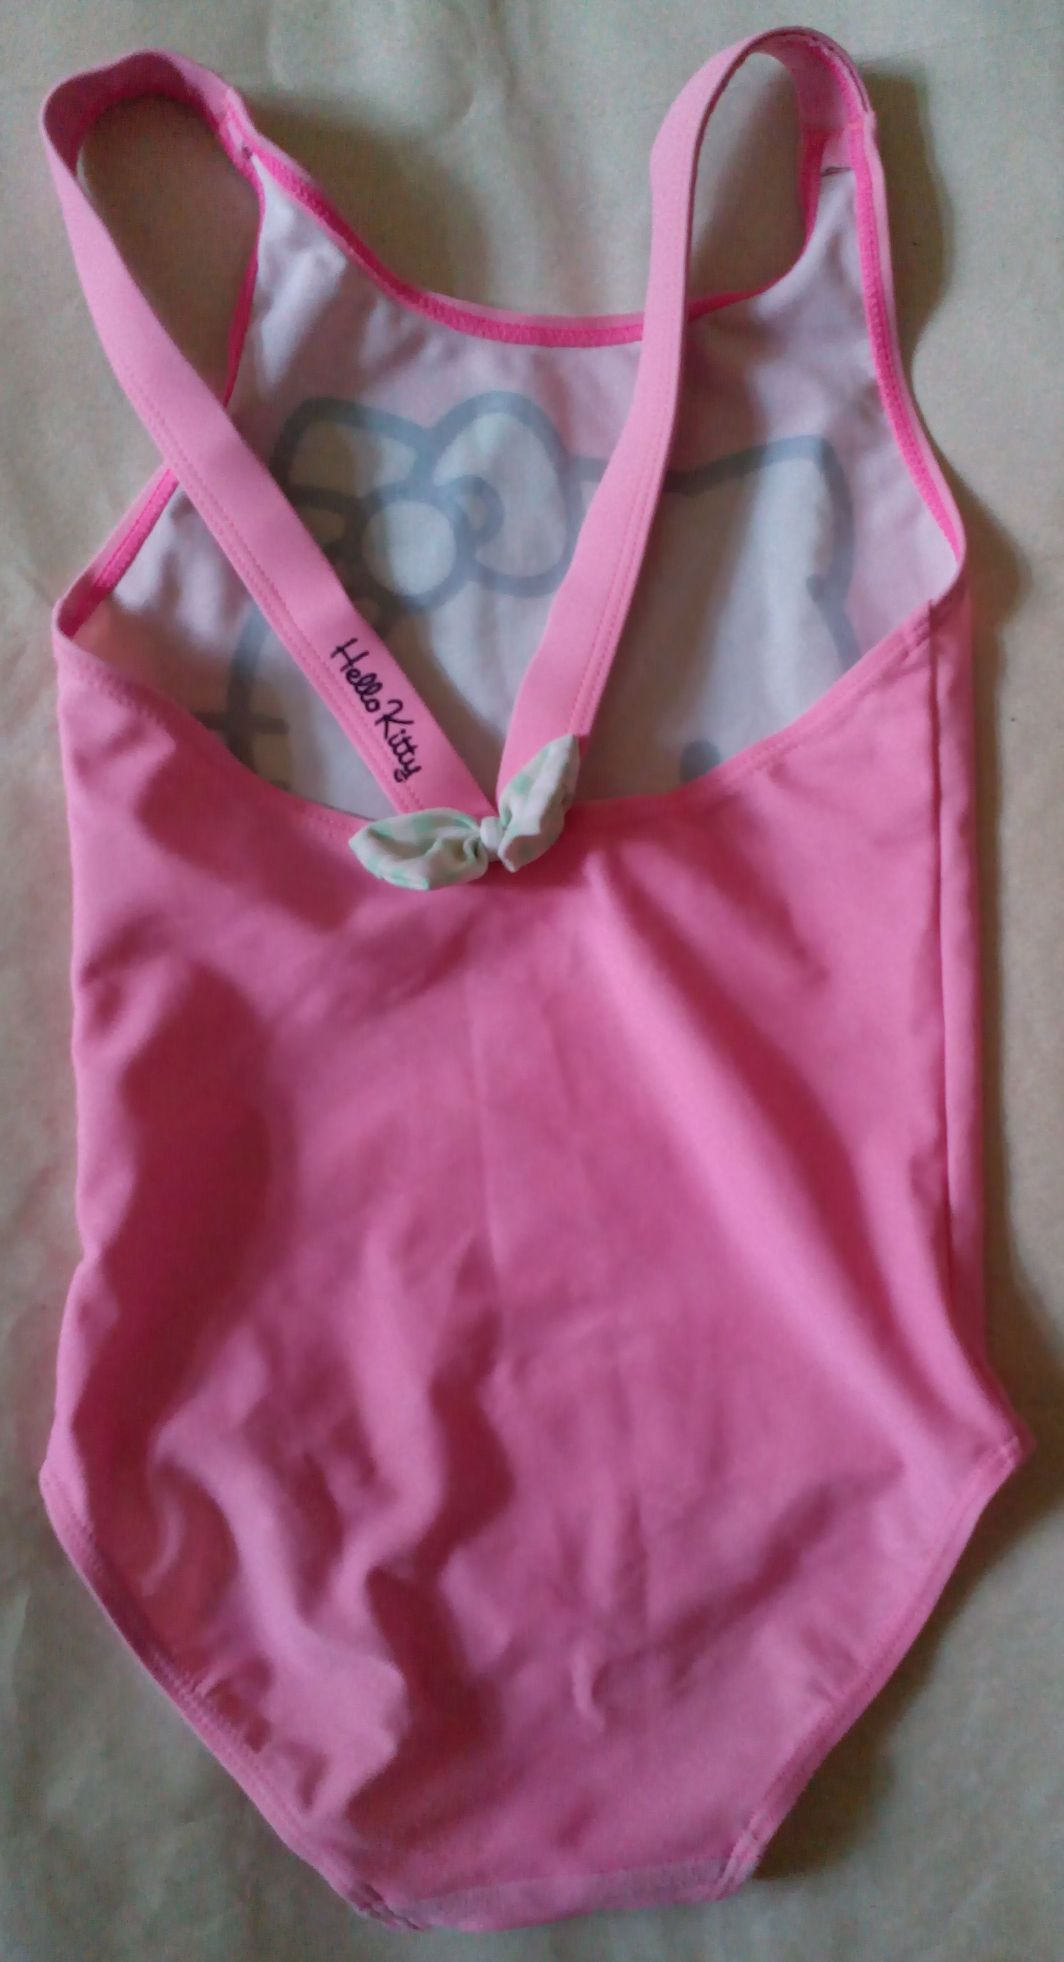 H&M girls Hello Kitty pink x-back girls swimsuit